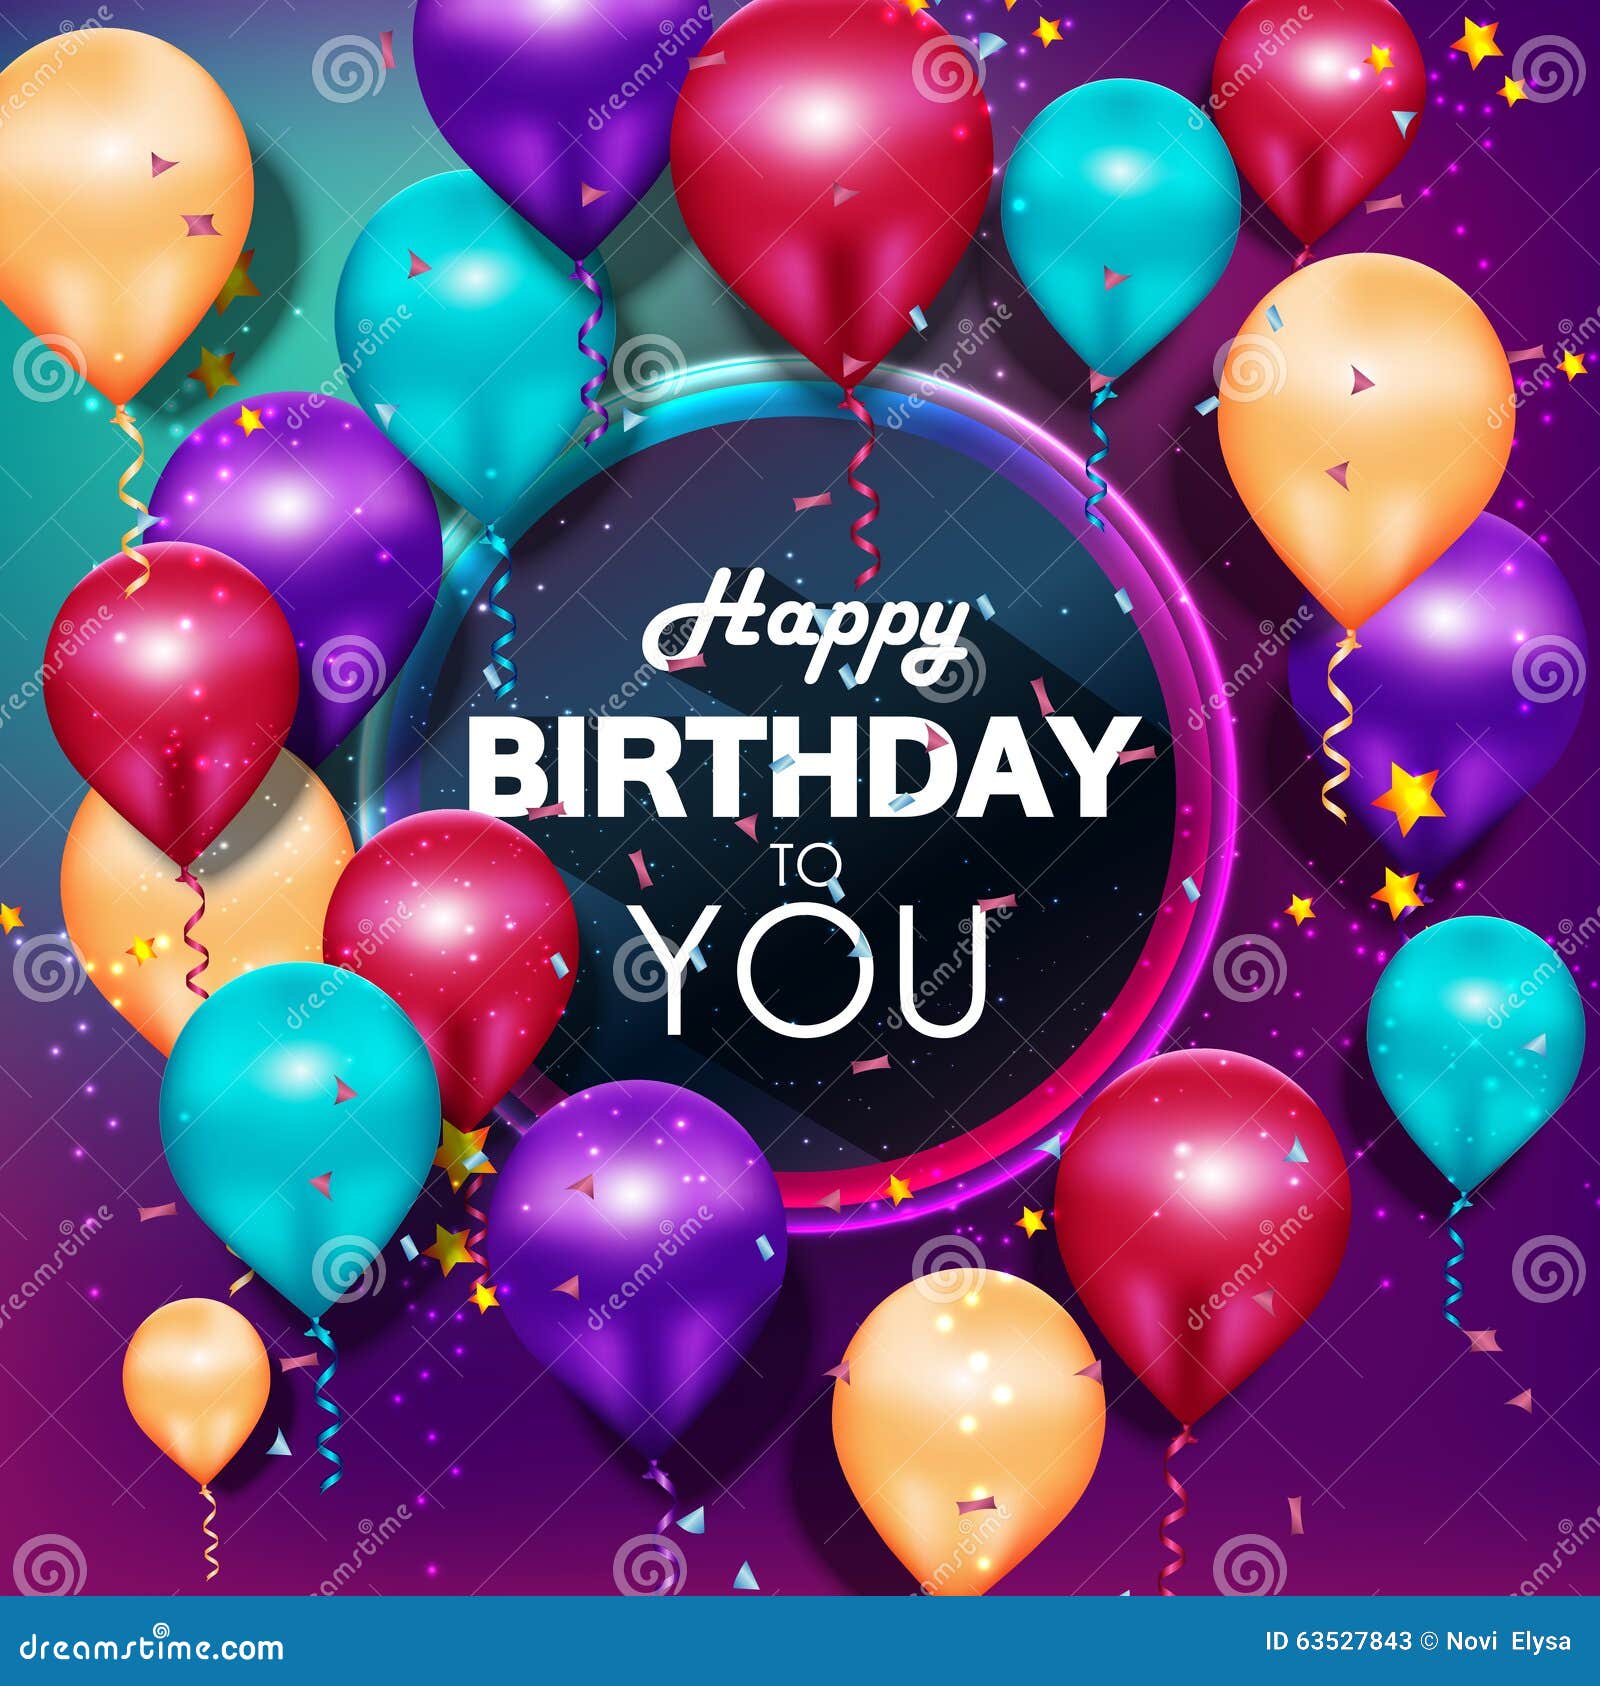 colorful-balloons-happy-birthday-purple-background-illustration-63527843.jpg